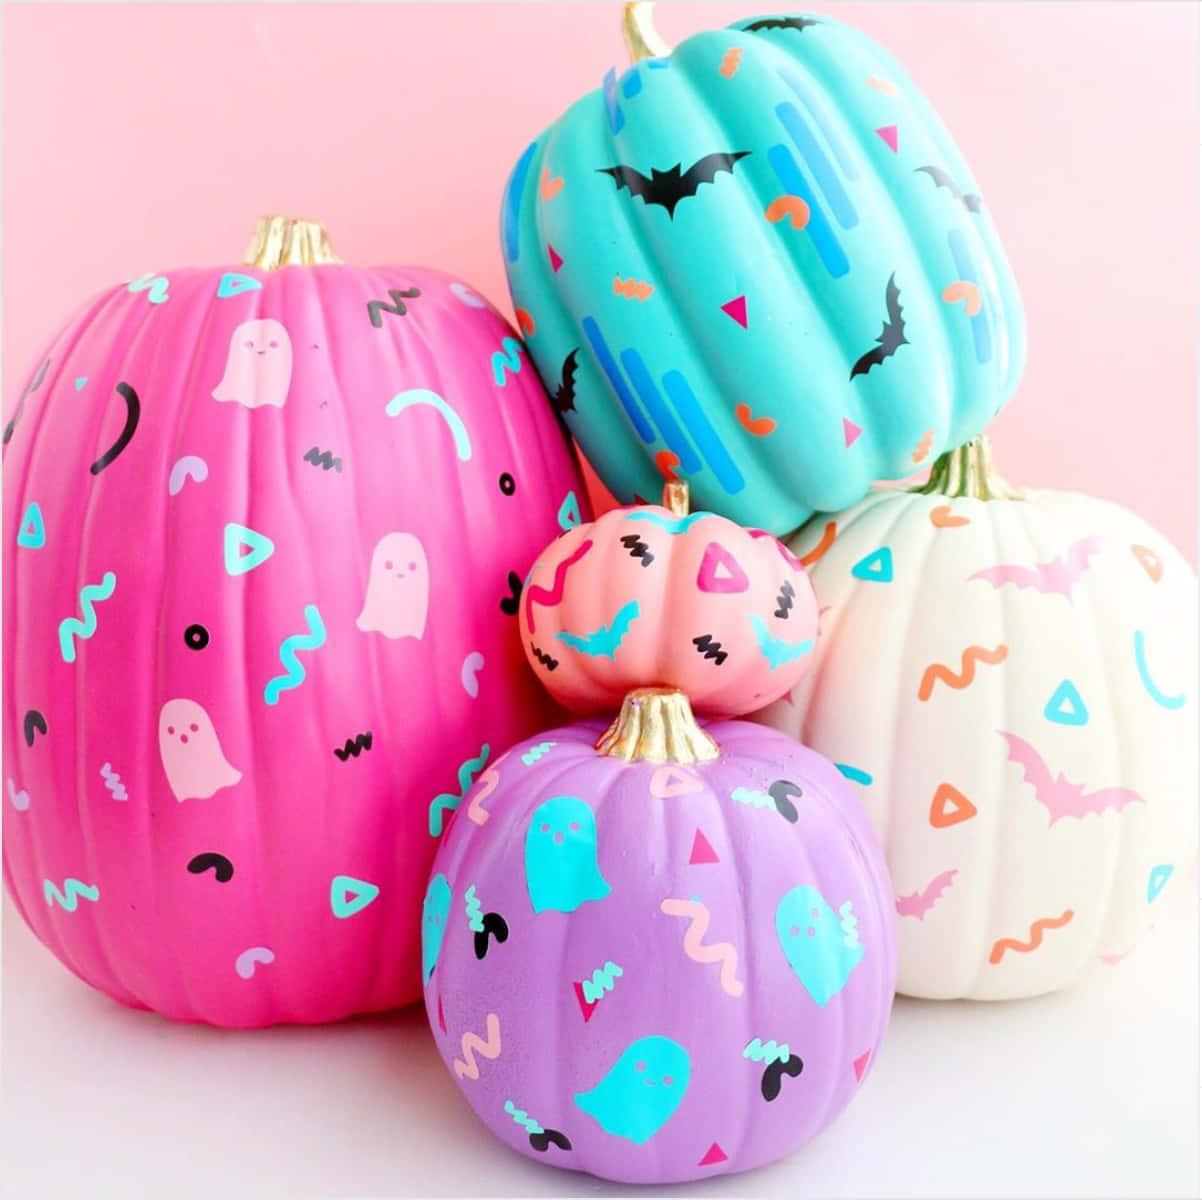 A Bright Pink Pumpkin For Your Halloween Decor Wallpaper